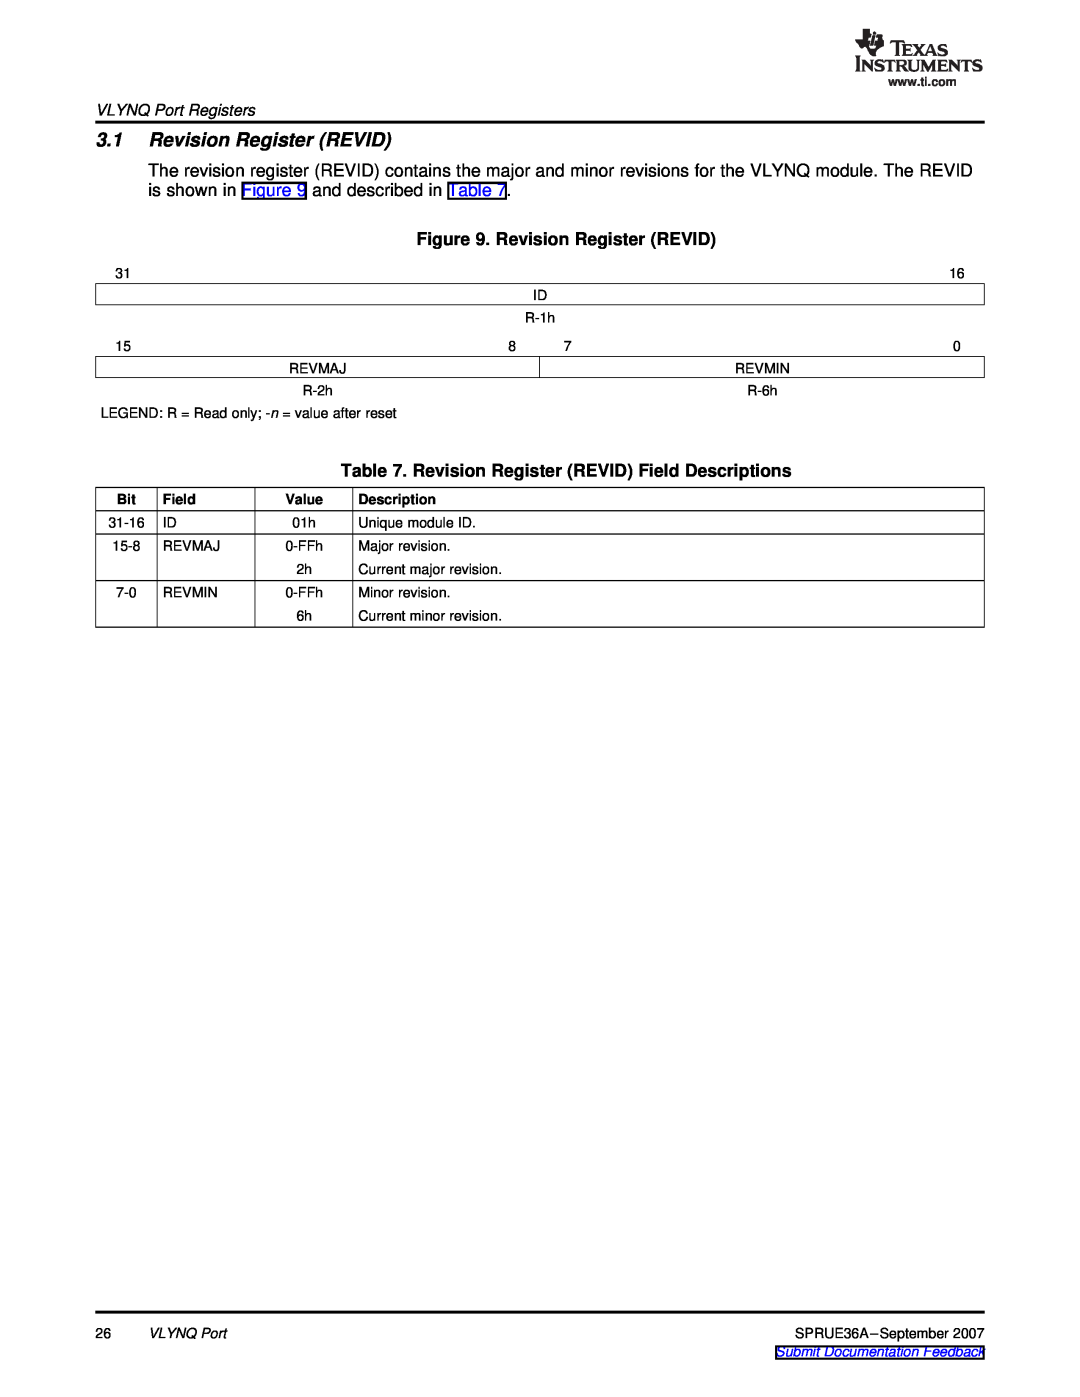 Texas Instruments manual Revision Register REVID Field Descriptions, VLYNQ Port Registers, Value 